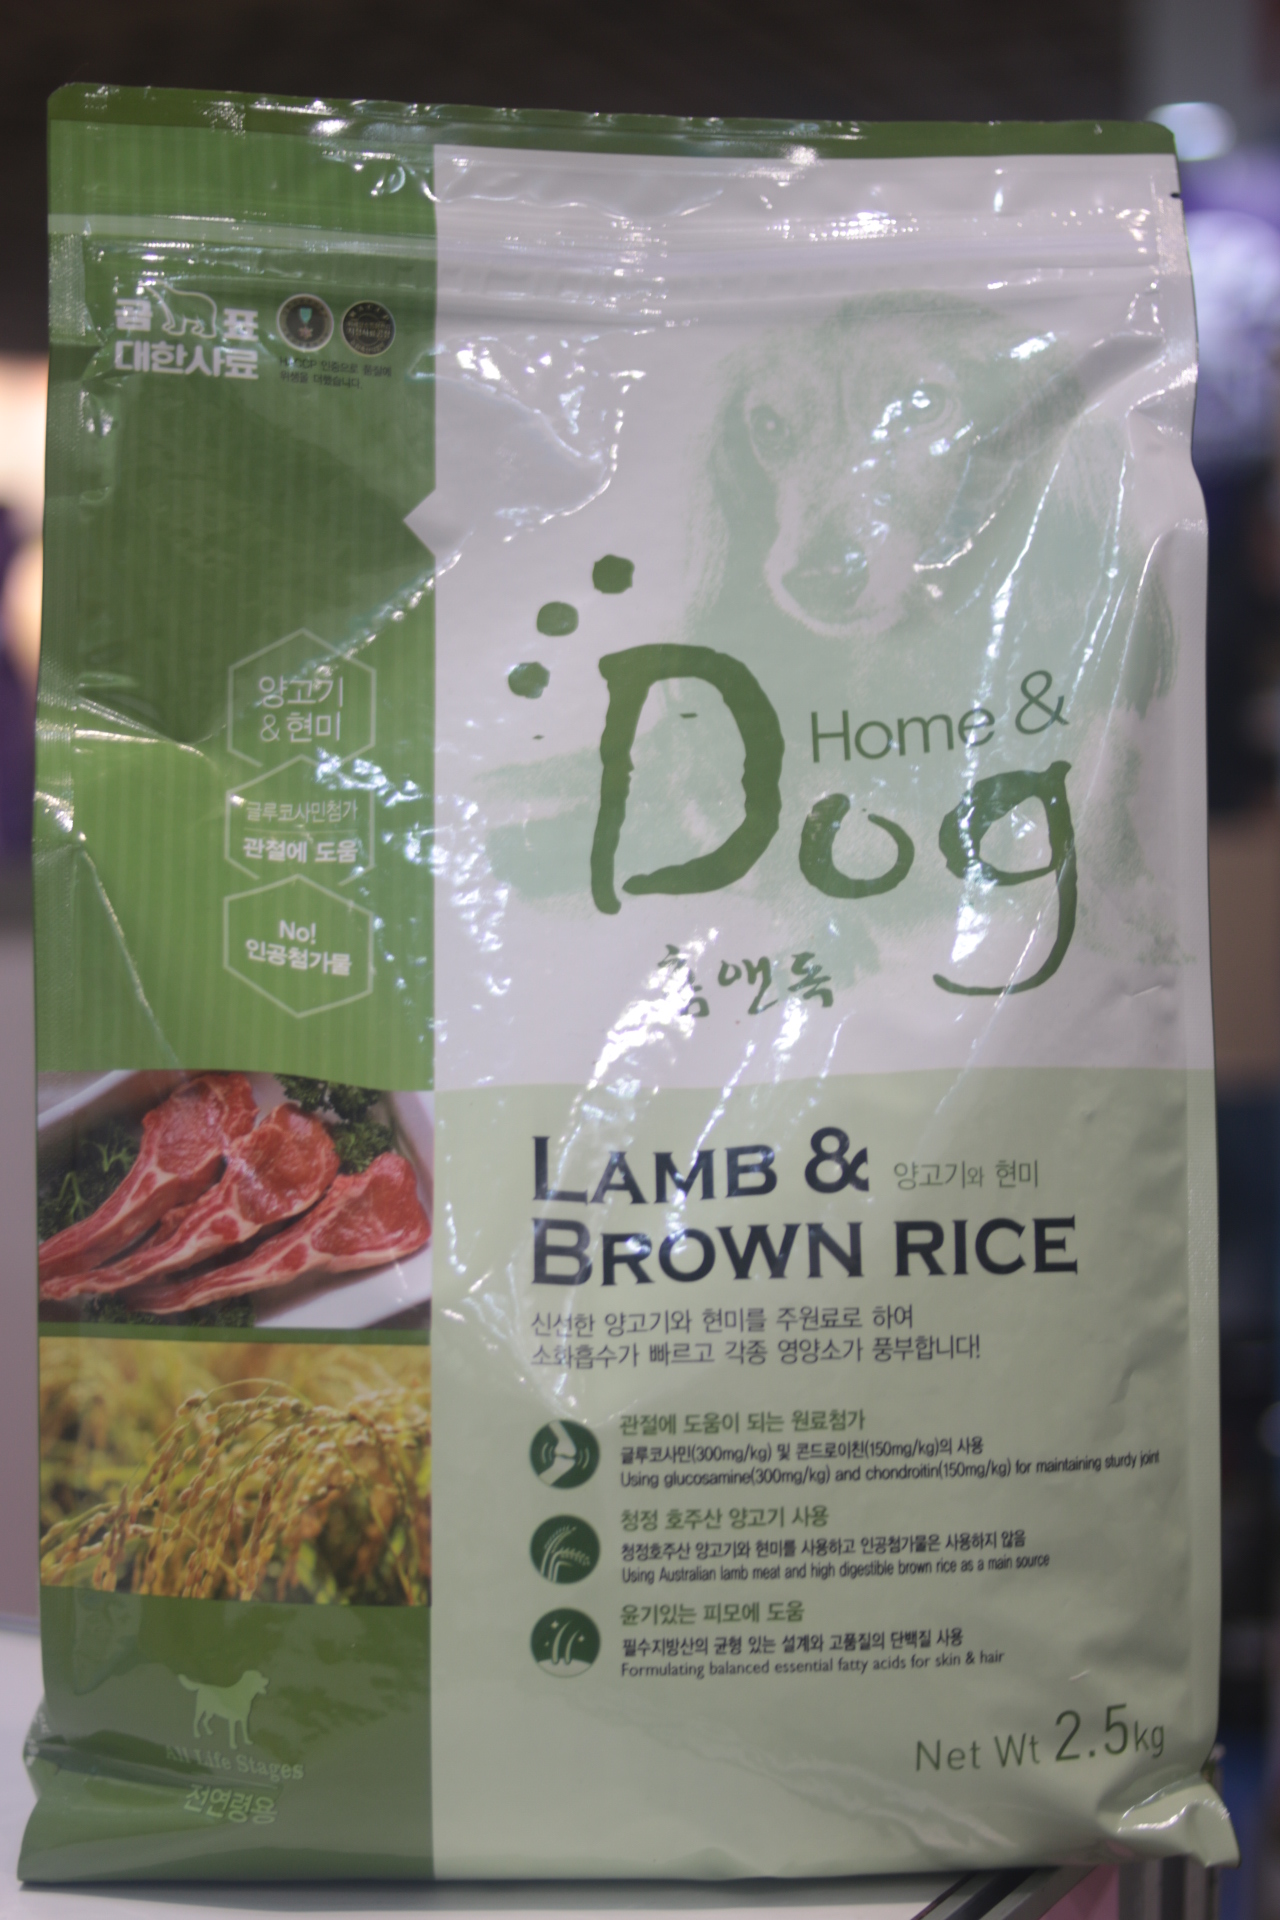 家珍寶羊肉&糙米配方
Home&Dog Lamb & Brown Rice